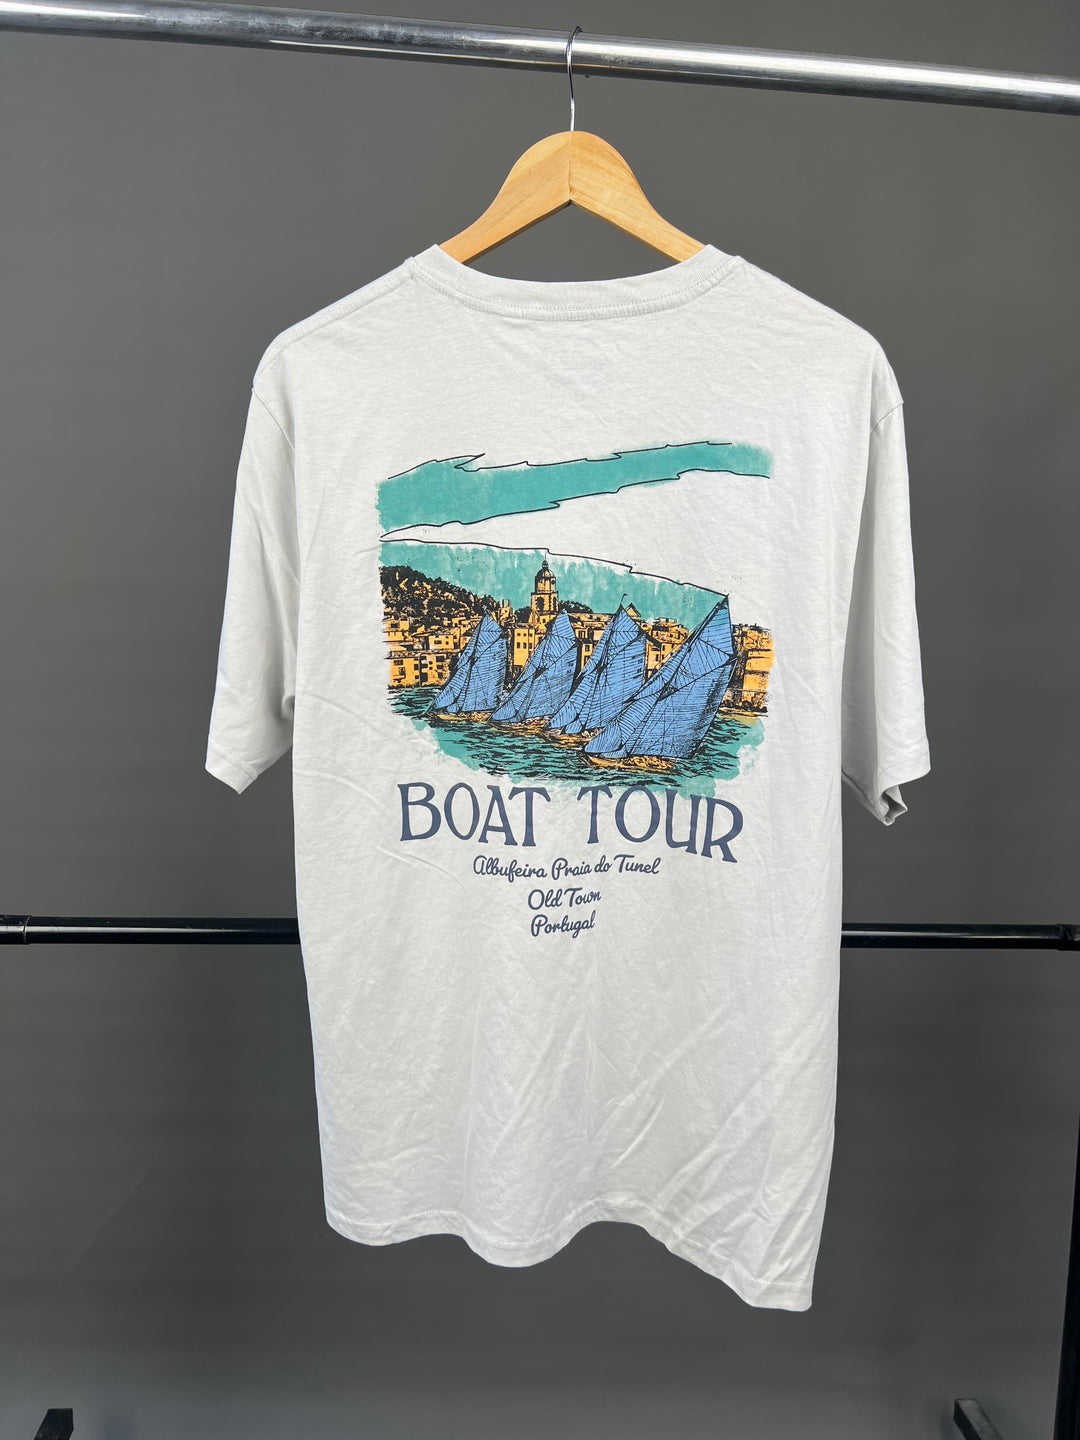 Garage Boat Tour t-shirt